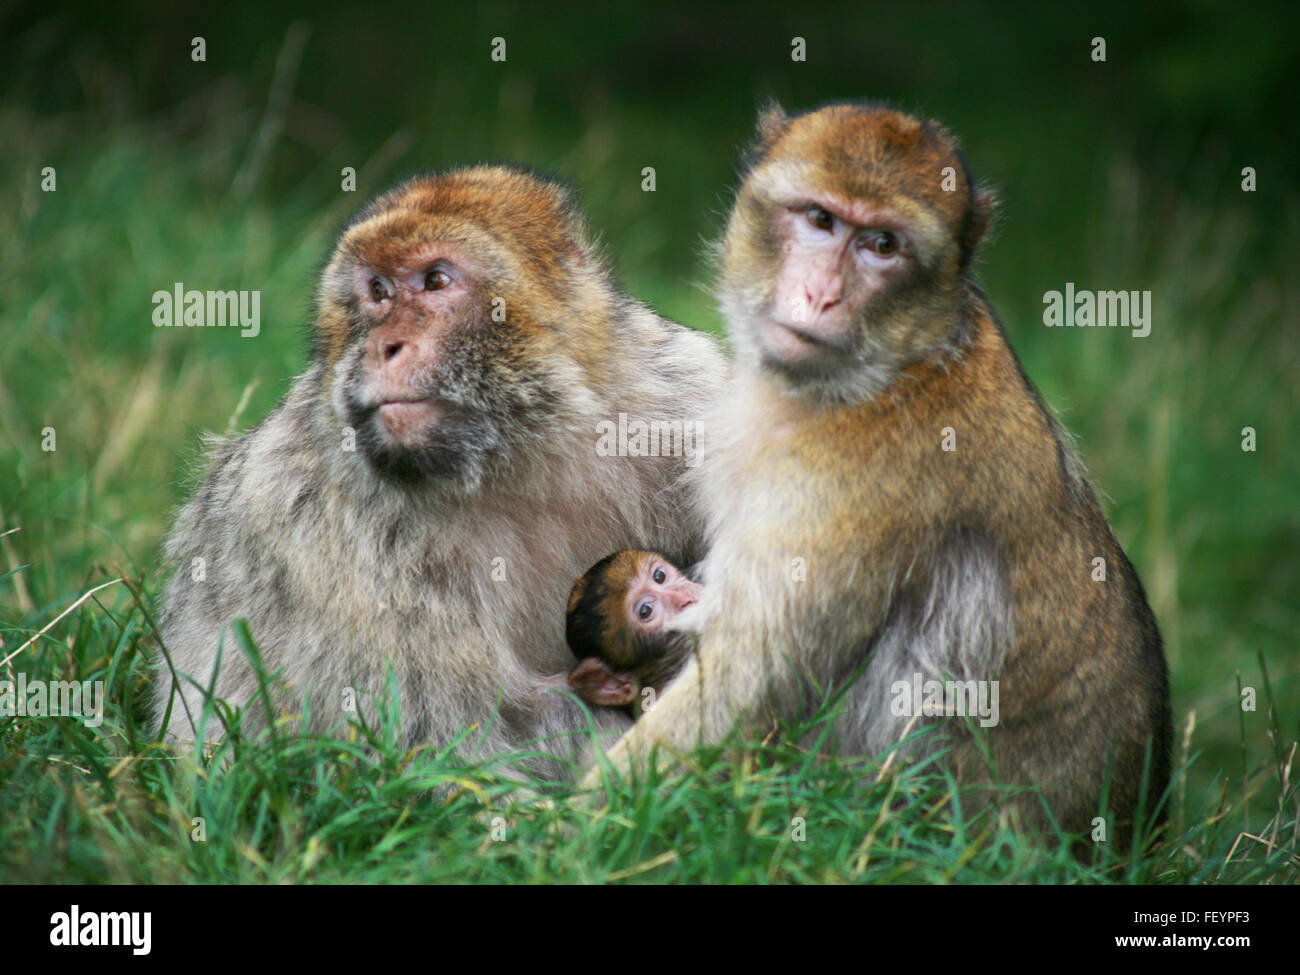 Monkey Forest, criatura mamífero, mono bebé, monos, monos gratis, libre mono, monos en hábitat Foto de stock